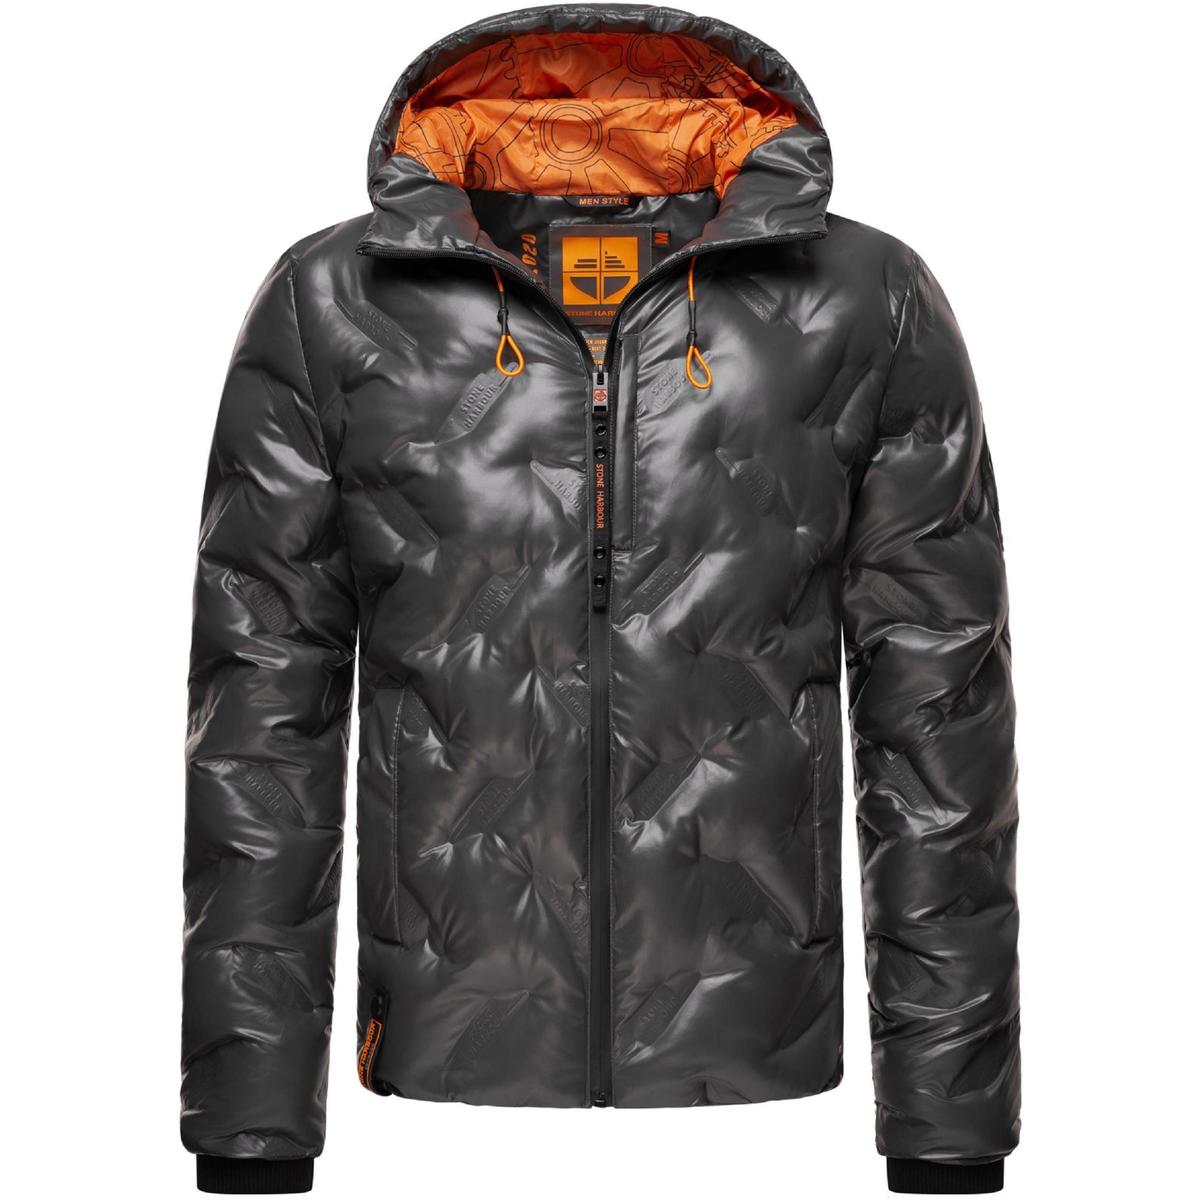 Stone Harbour Winterjacke Geroo Grau - Kleidung Jacken Herren 119,95 €